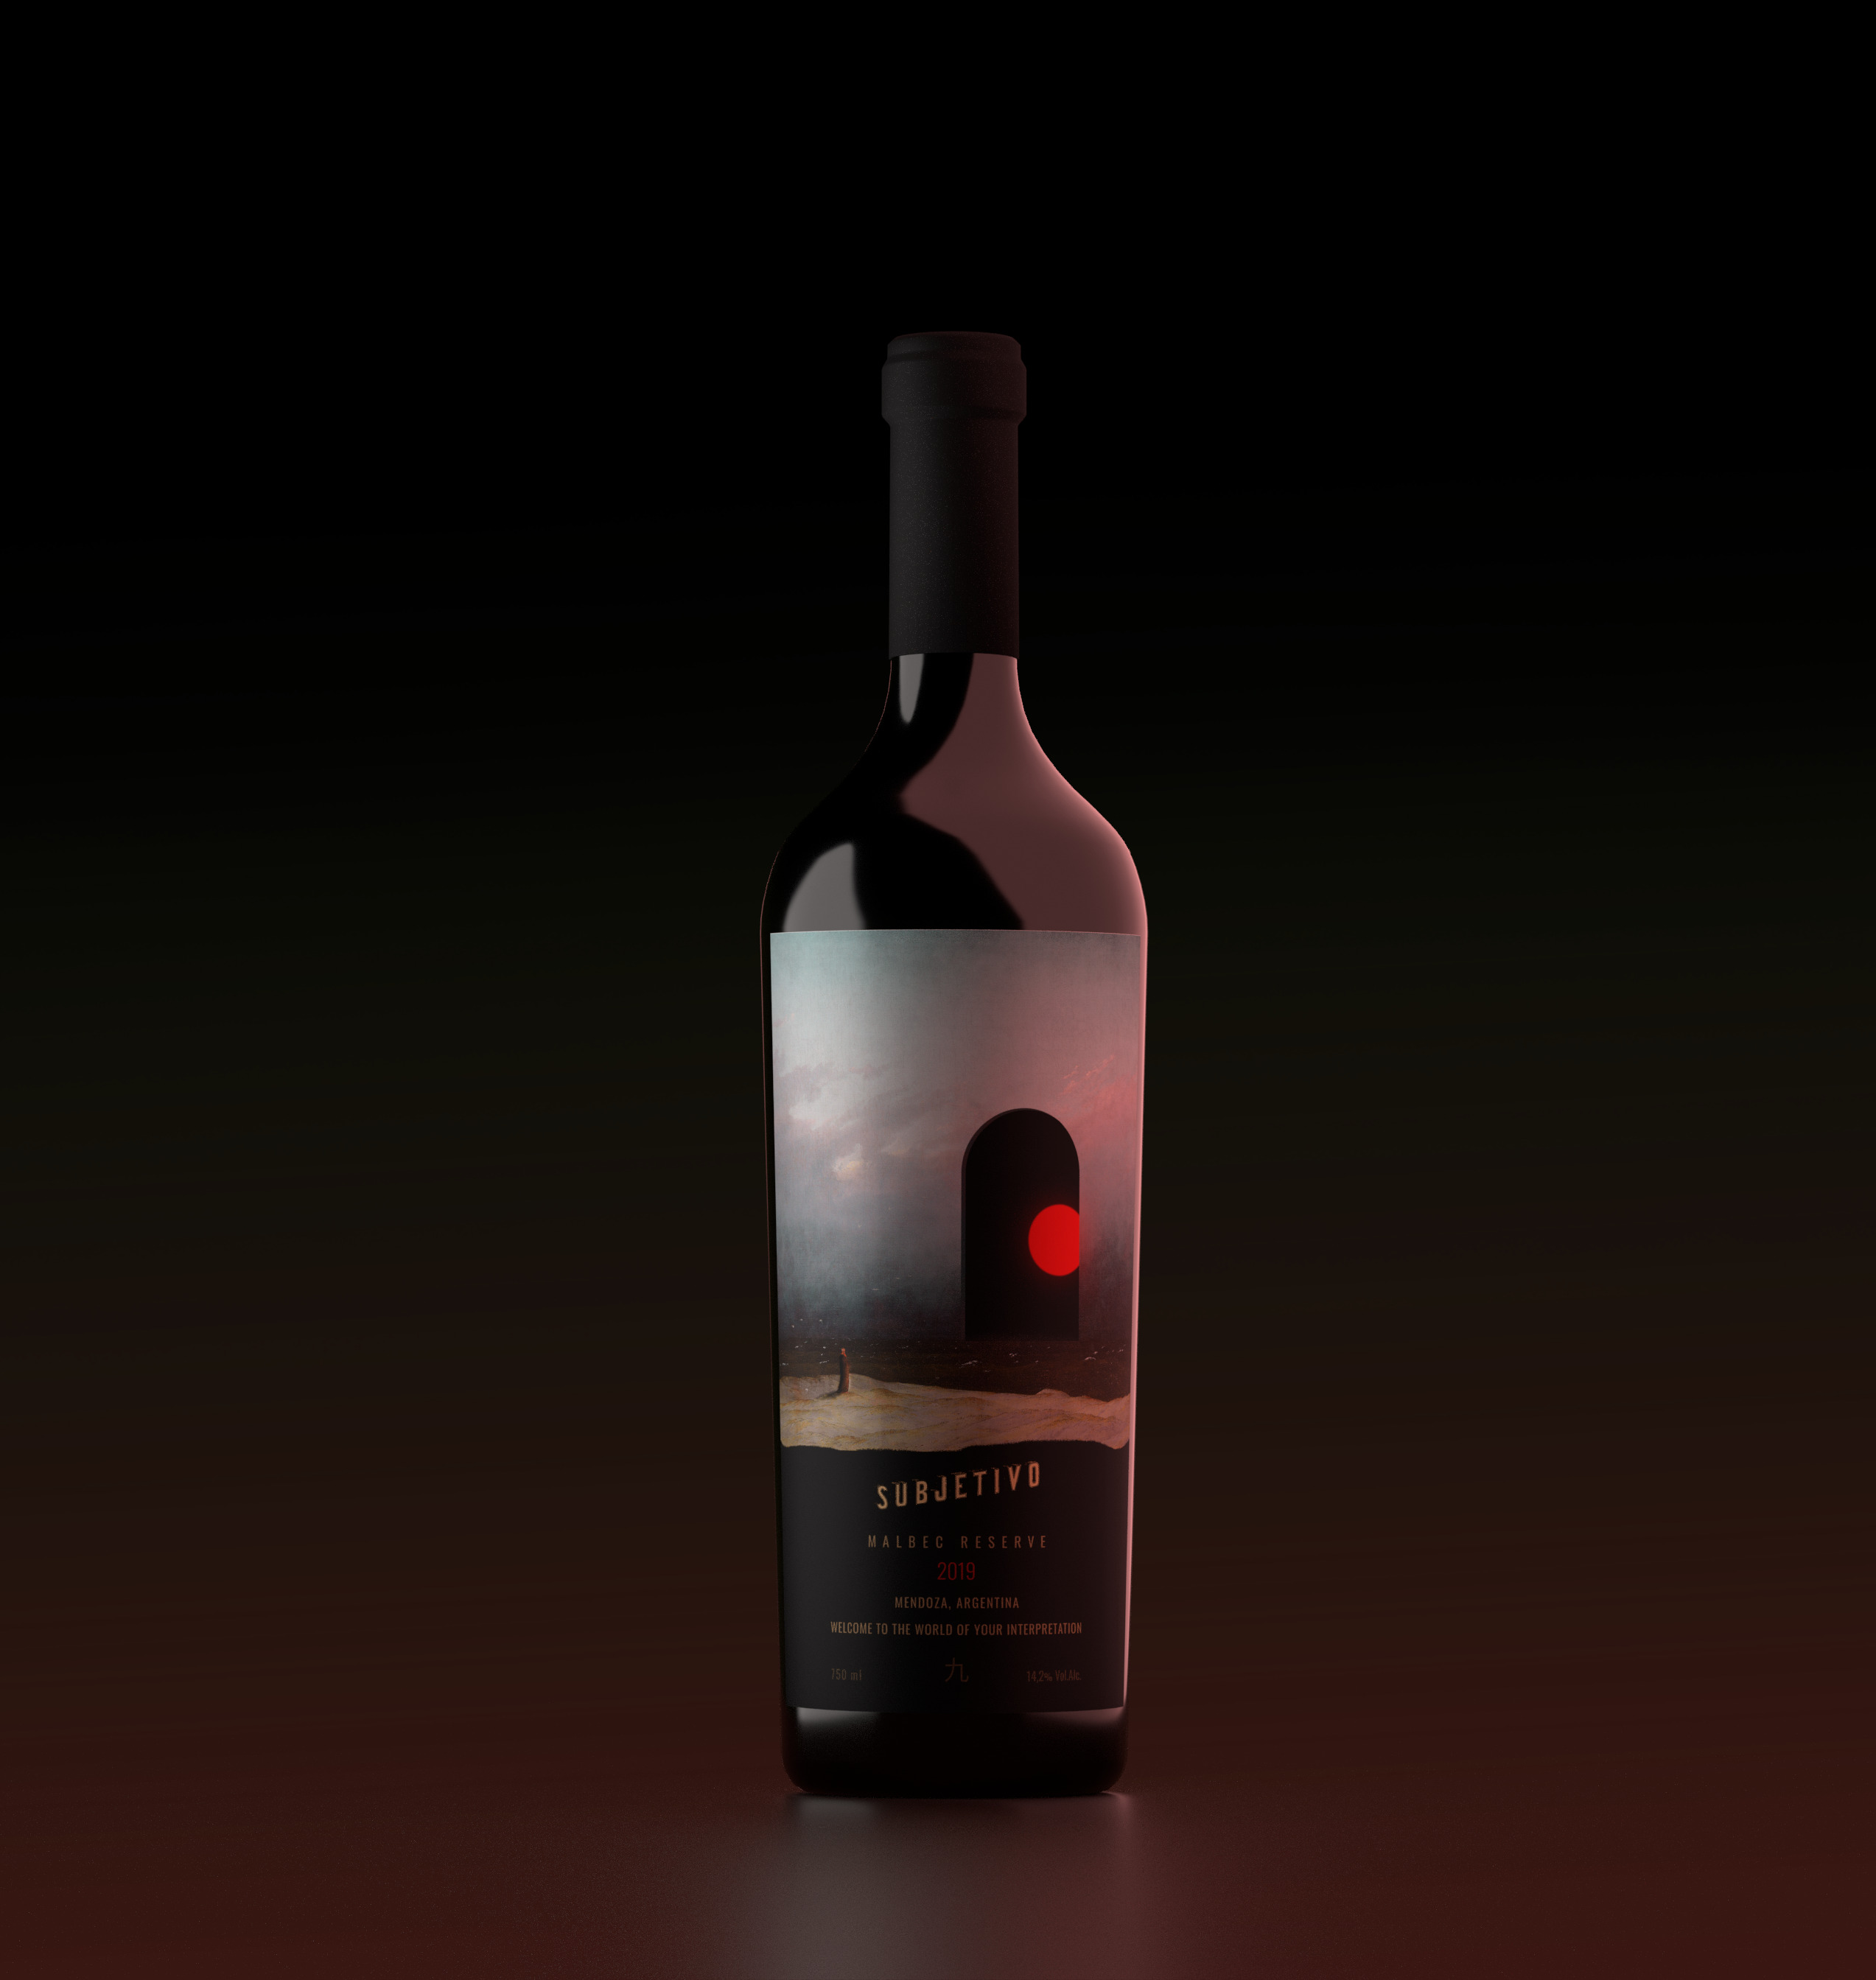 Subjetivo Wine Range Created by Portal.